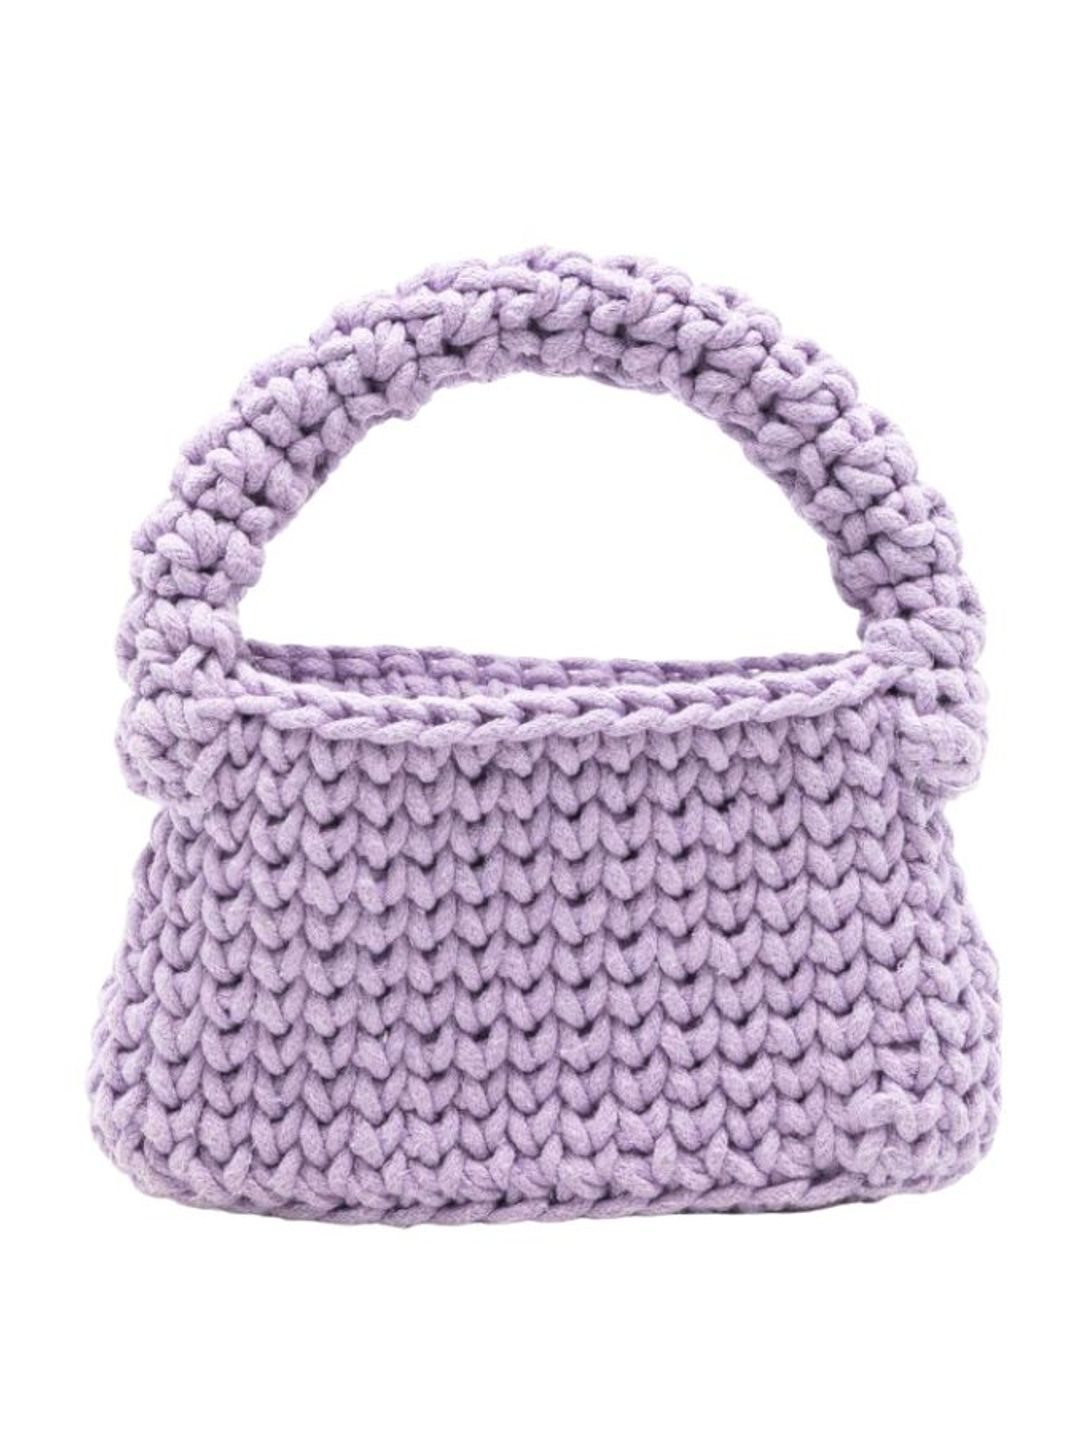 Lilac crochet bag 